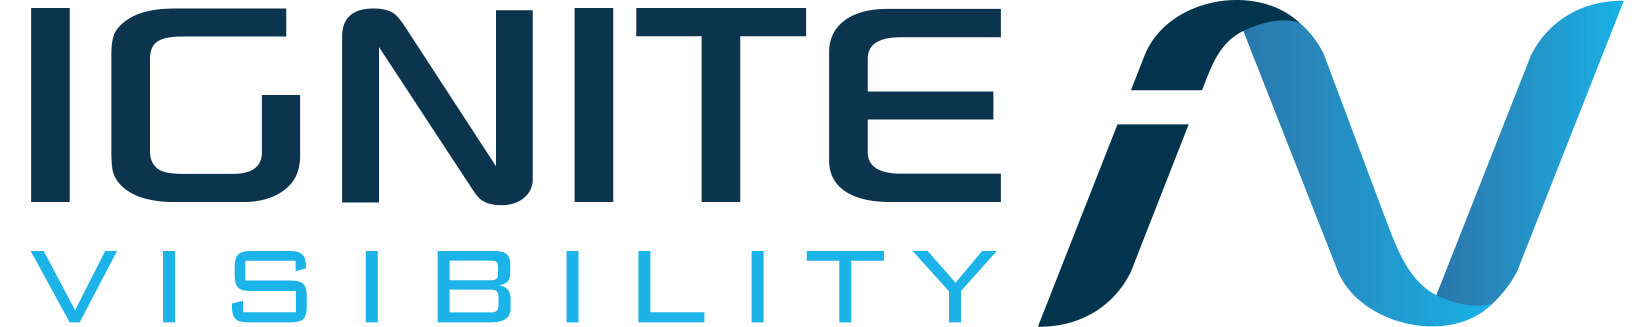  Best Enterprise SEO Business Logo: Ignite Visibility